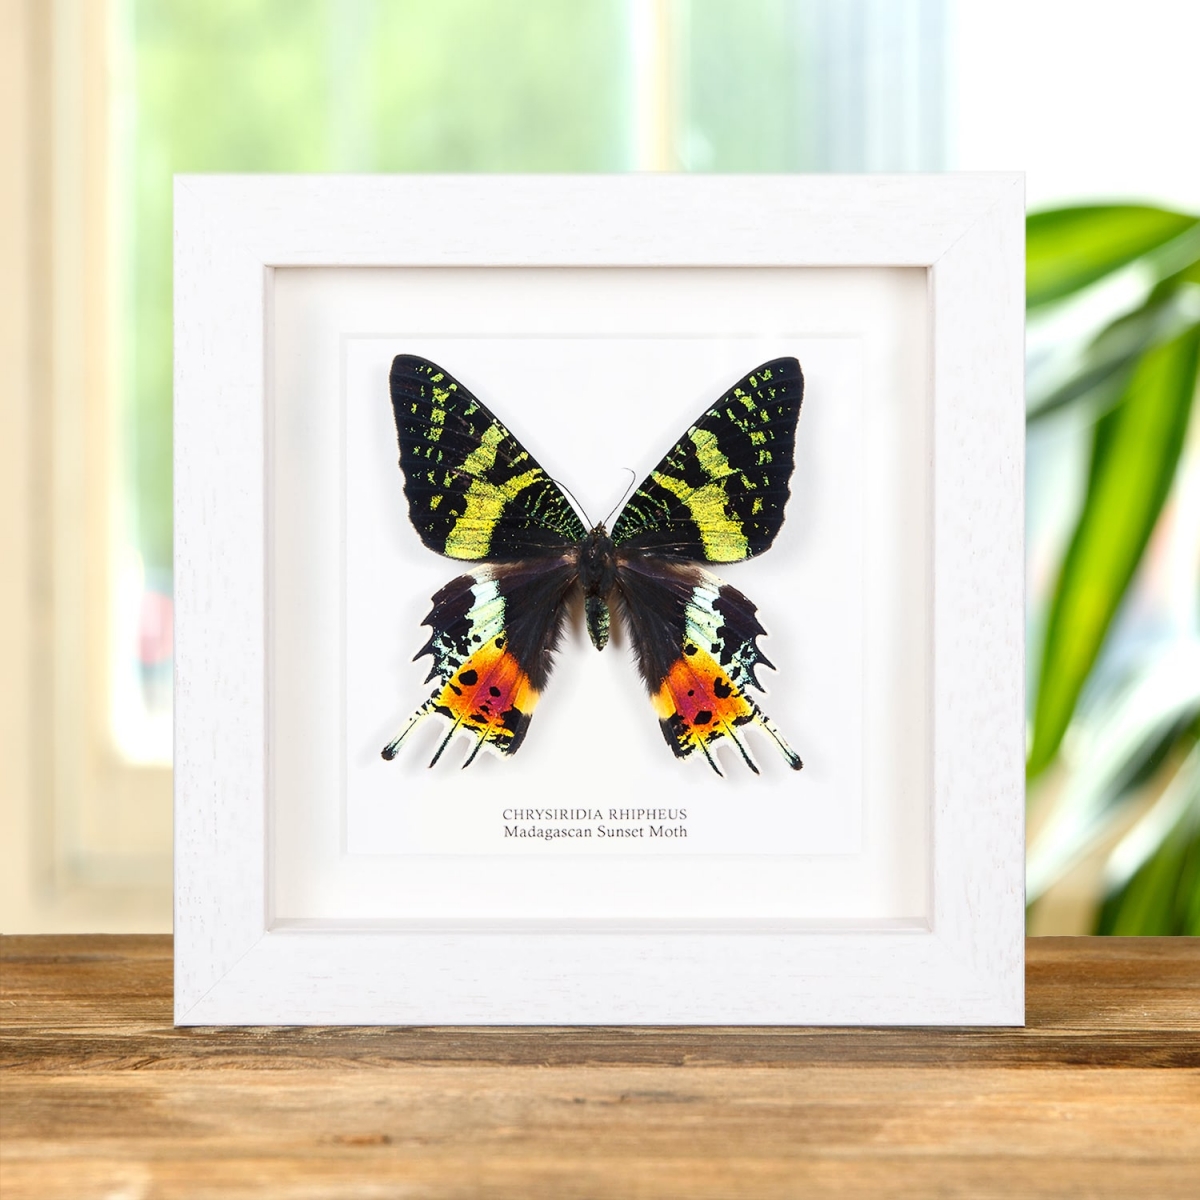 Madagascan Sunset Moth in Box Frame (Chrysiridia rhipheus)